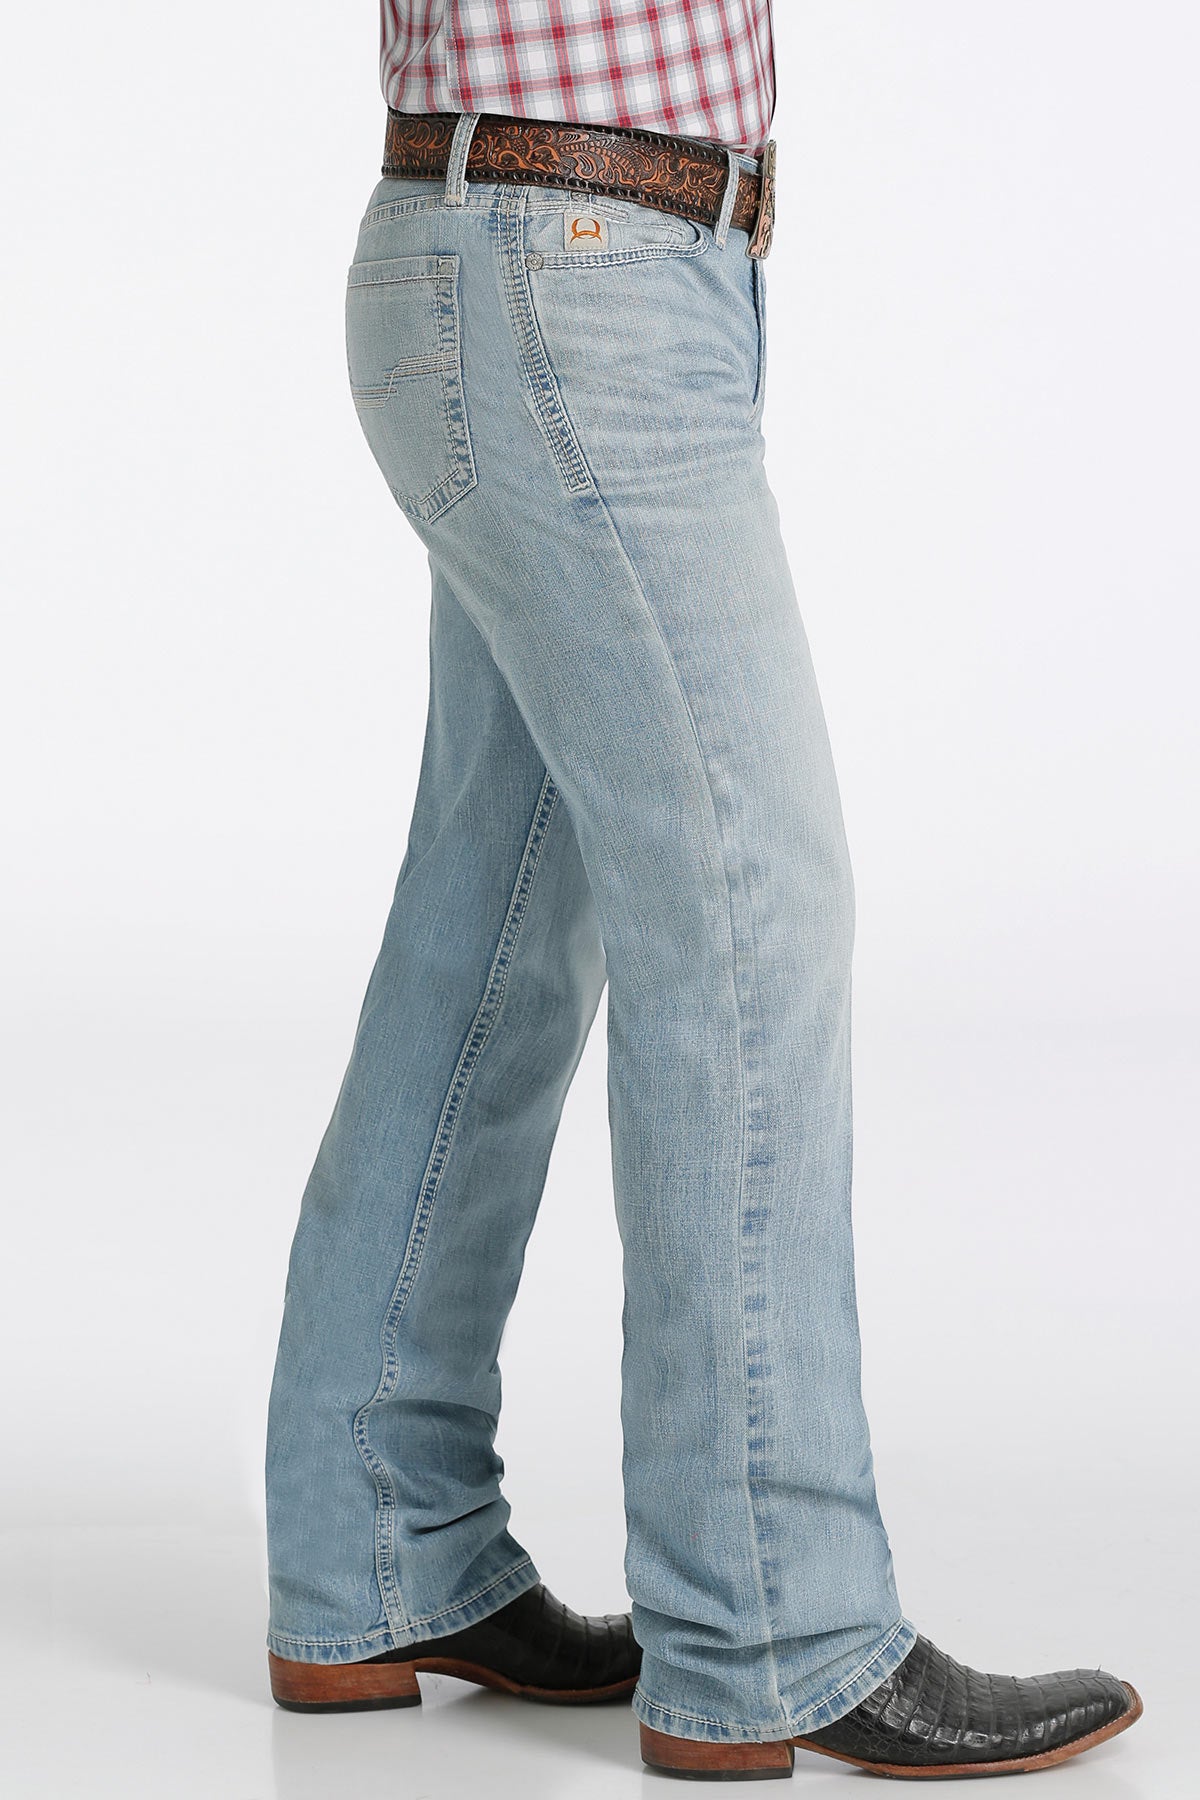 Cinch Men's Ian Slim Fit Performance Denim Jeans